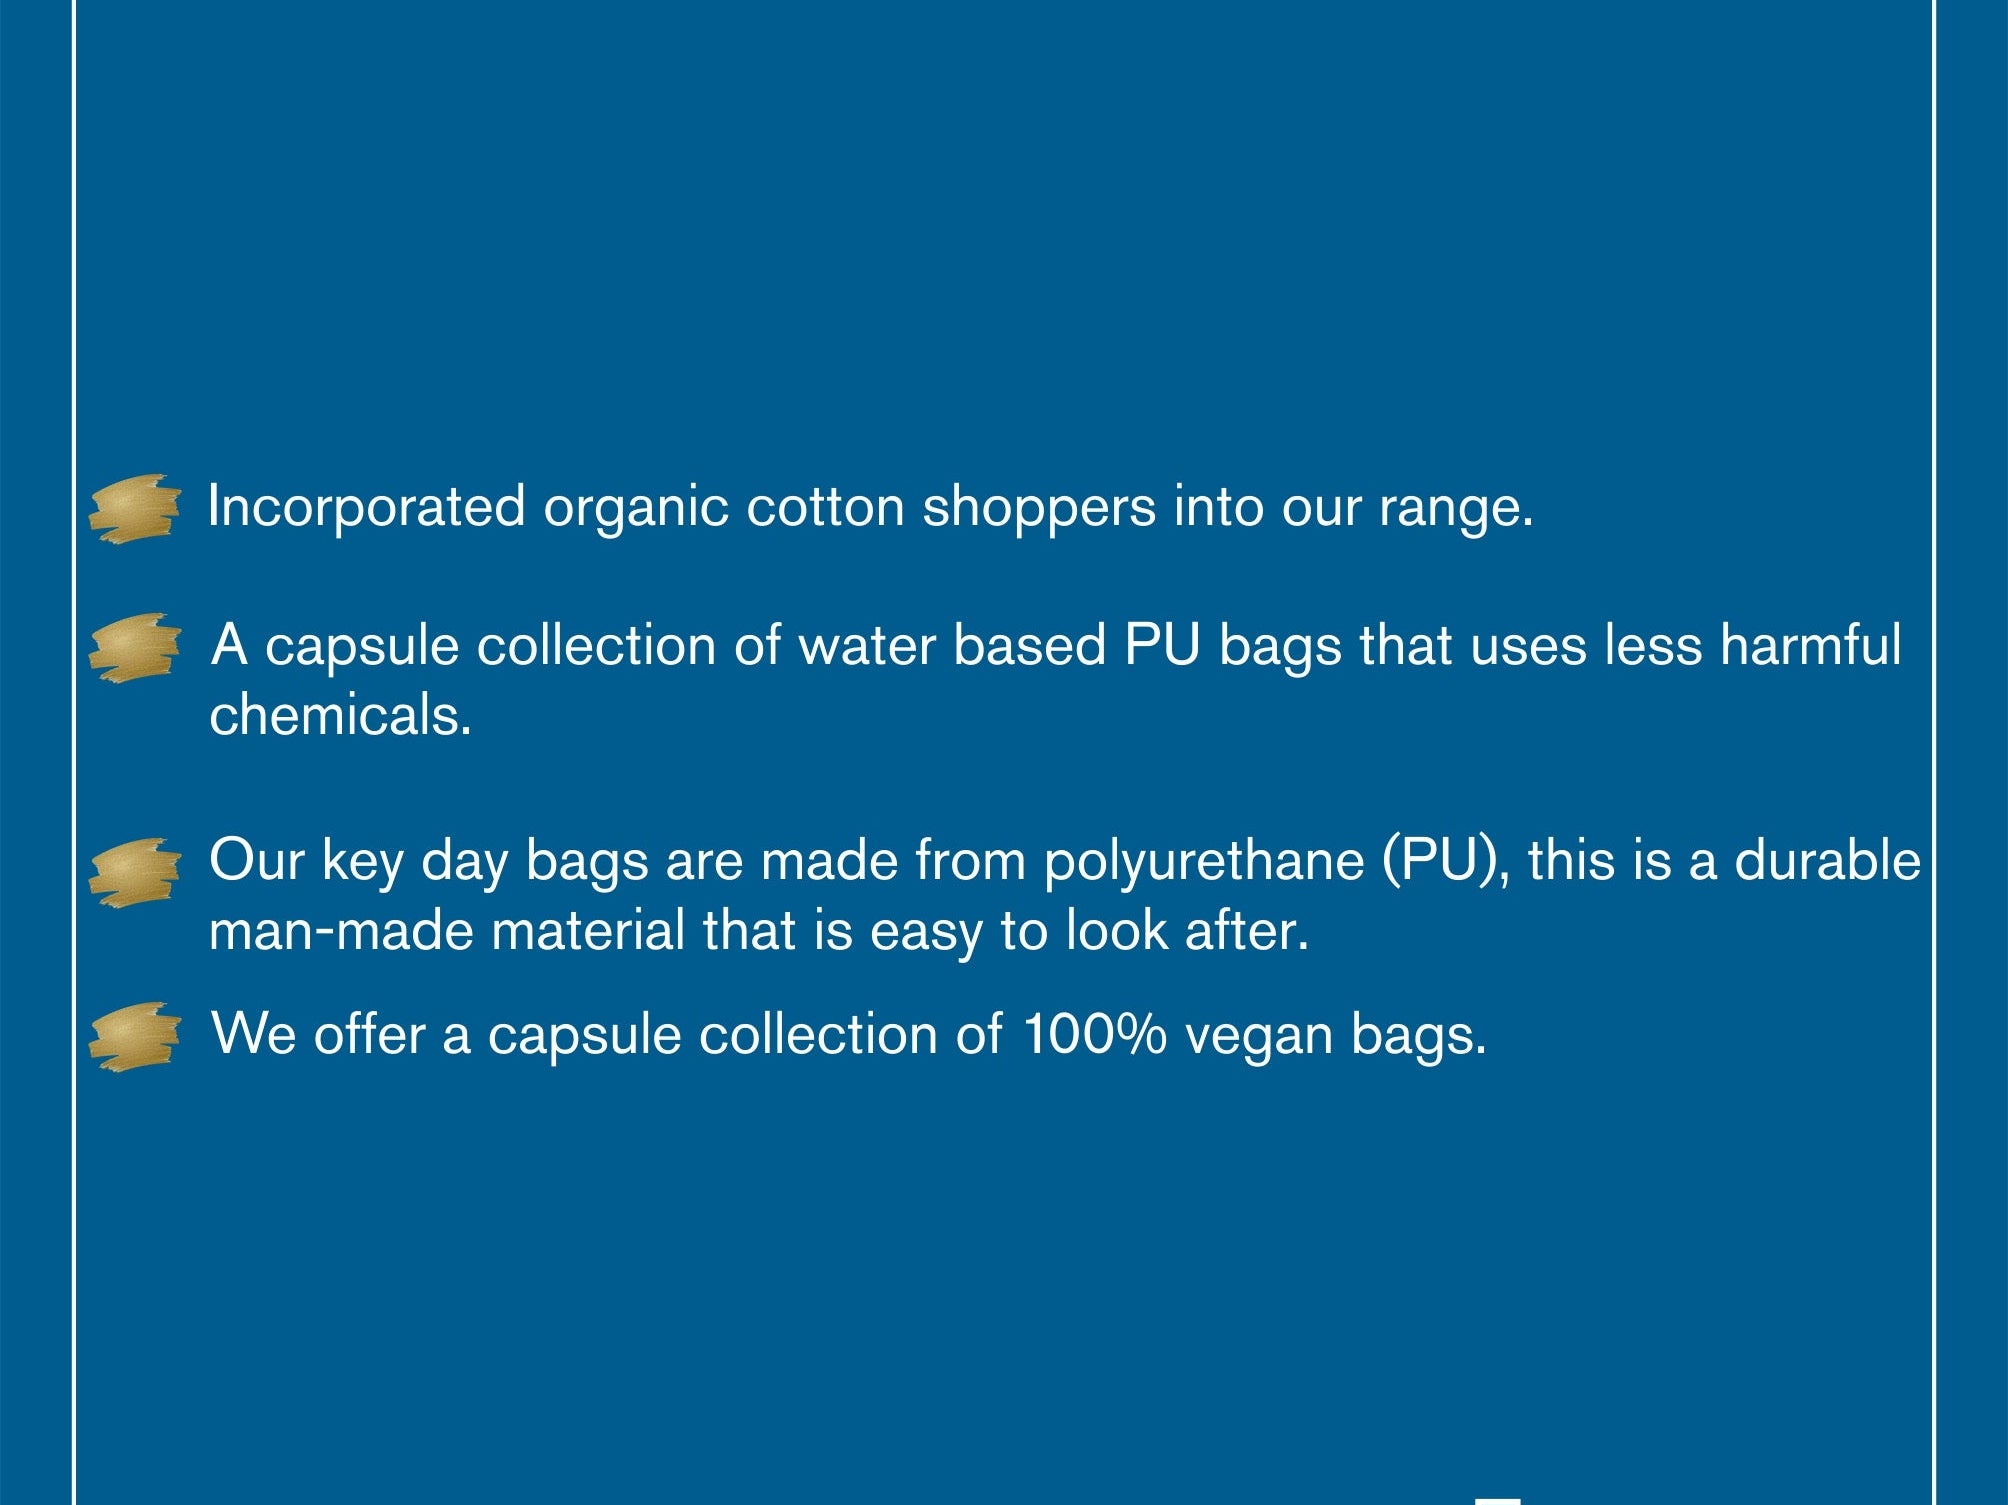 Accessorize London Women's Cotton Multi Jungle shopper Shopper Bag